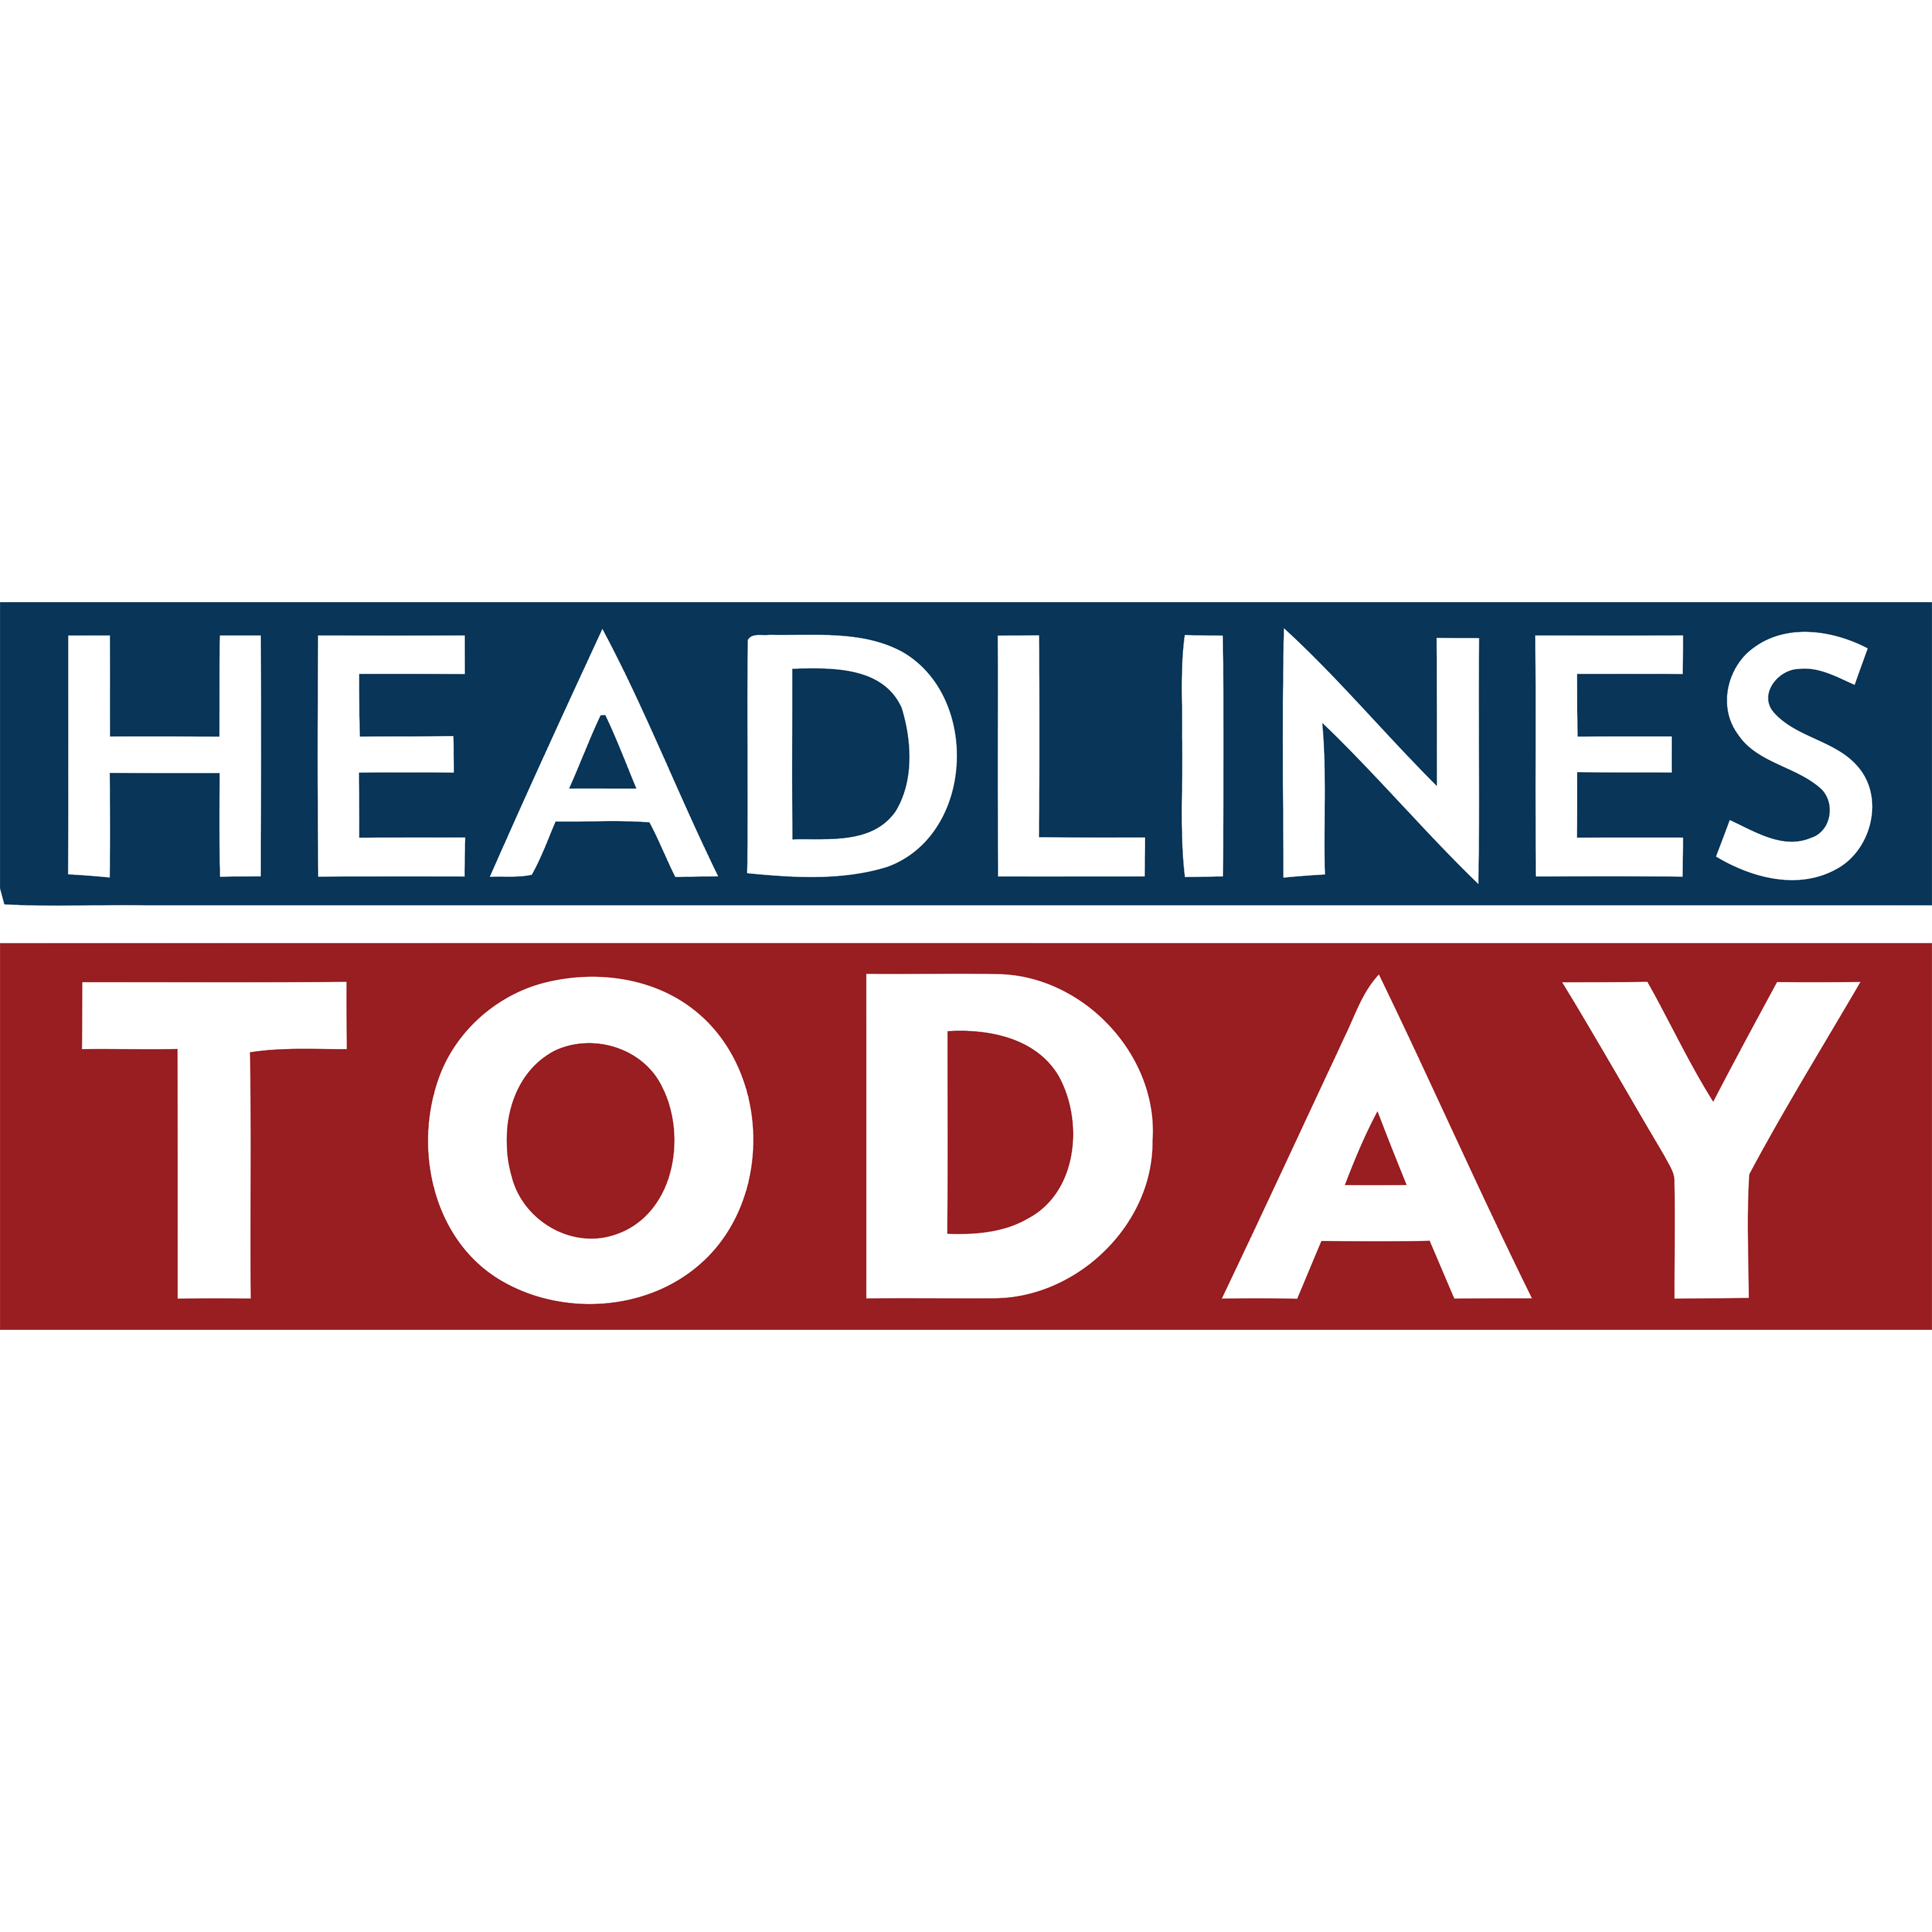 Headlines Today Logo Transparent Image